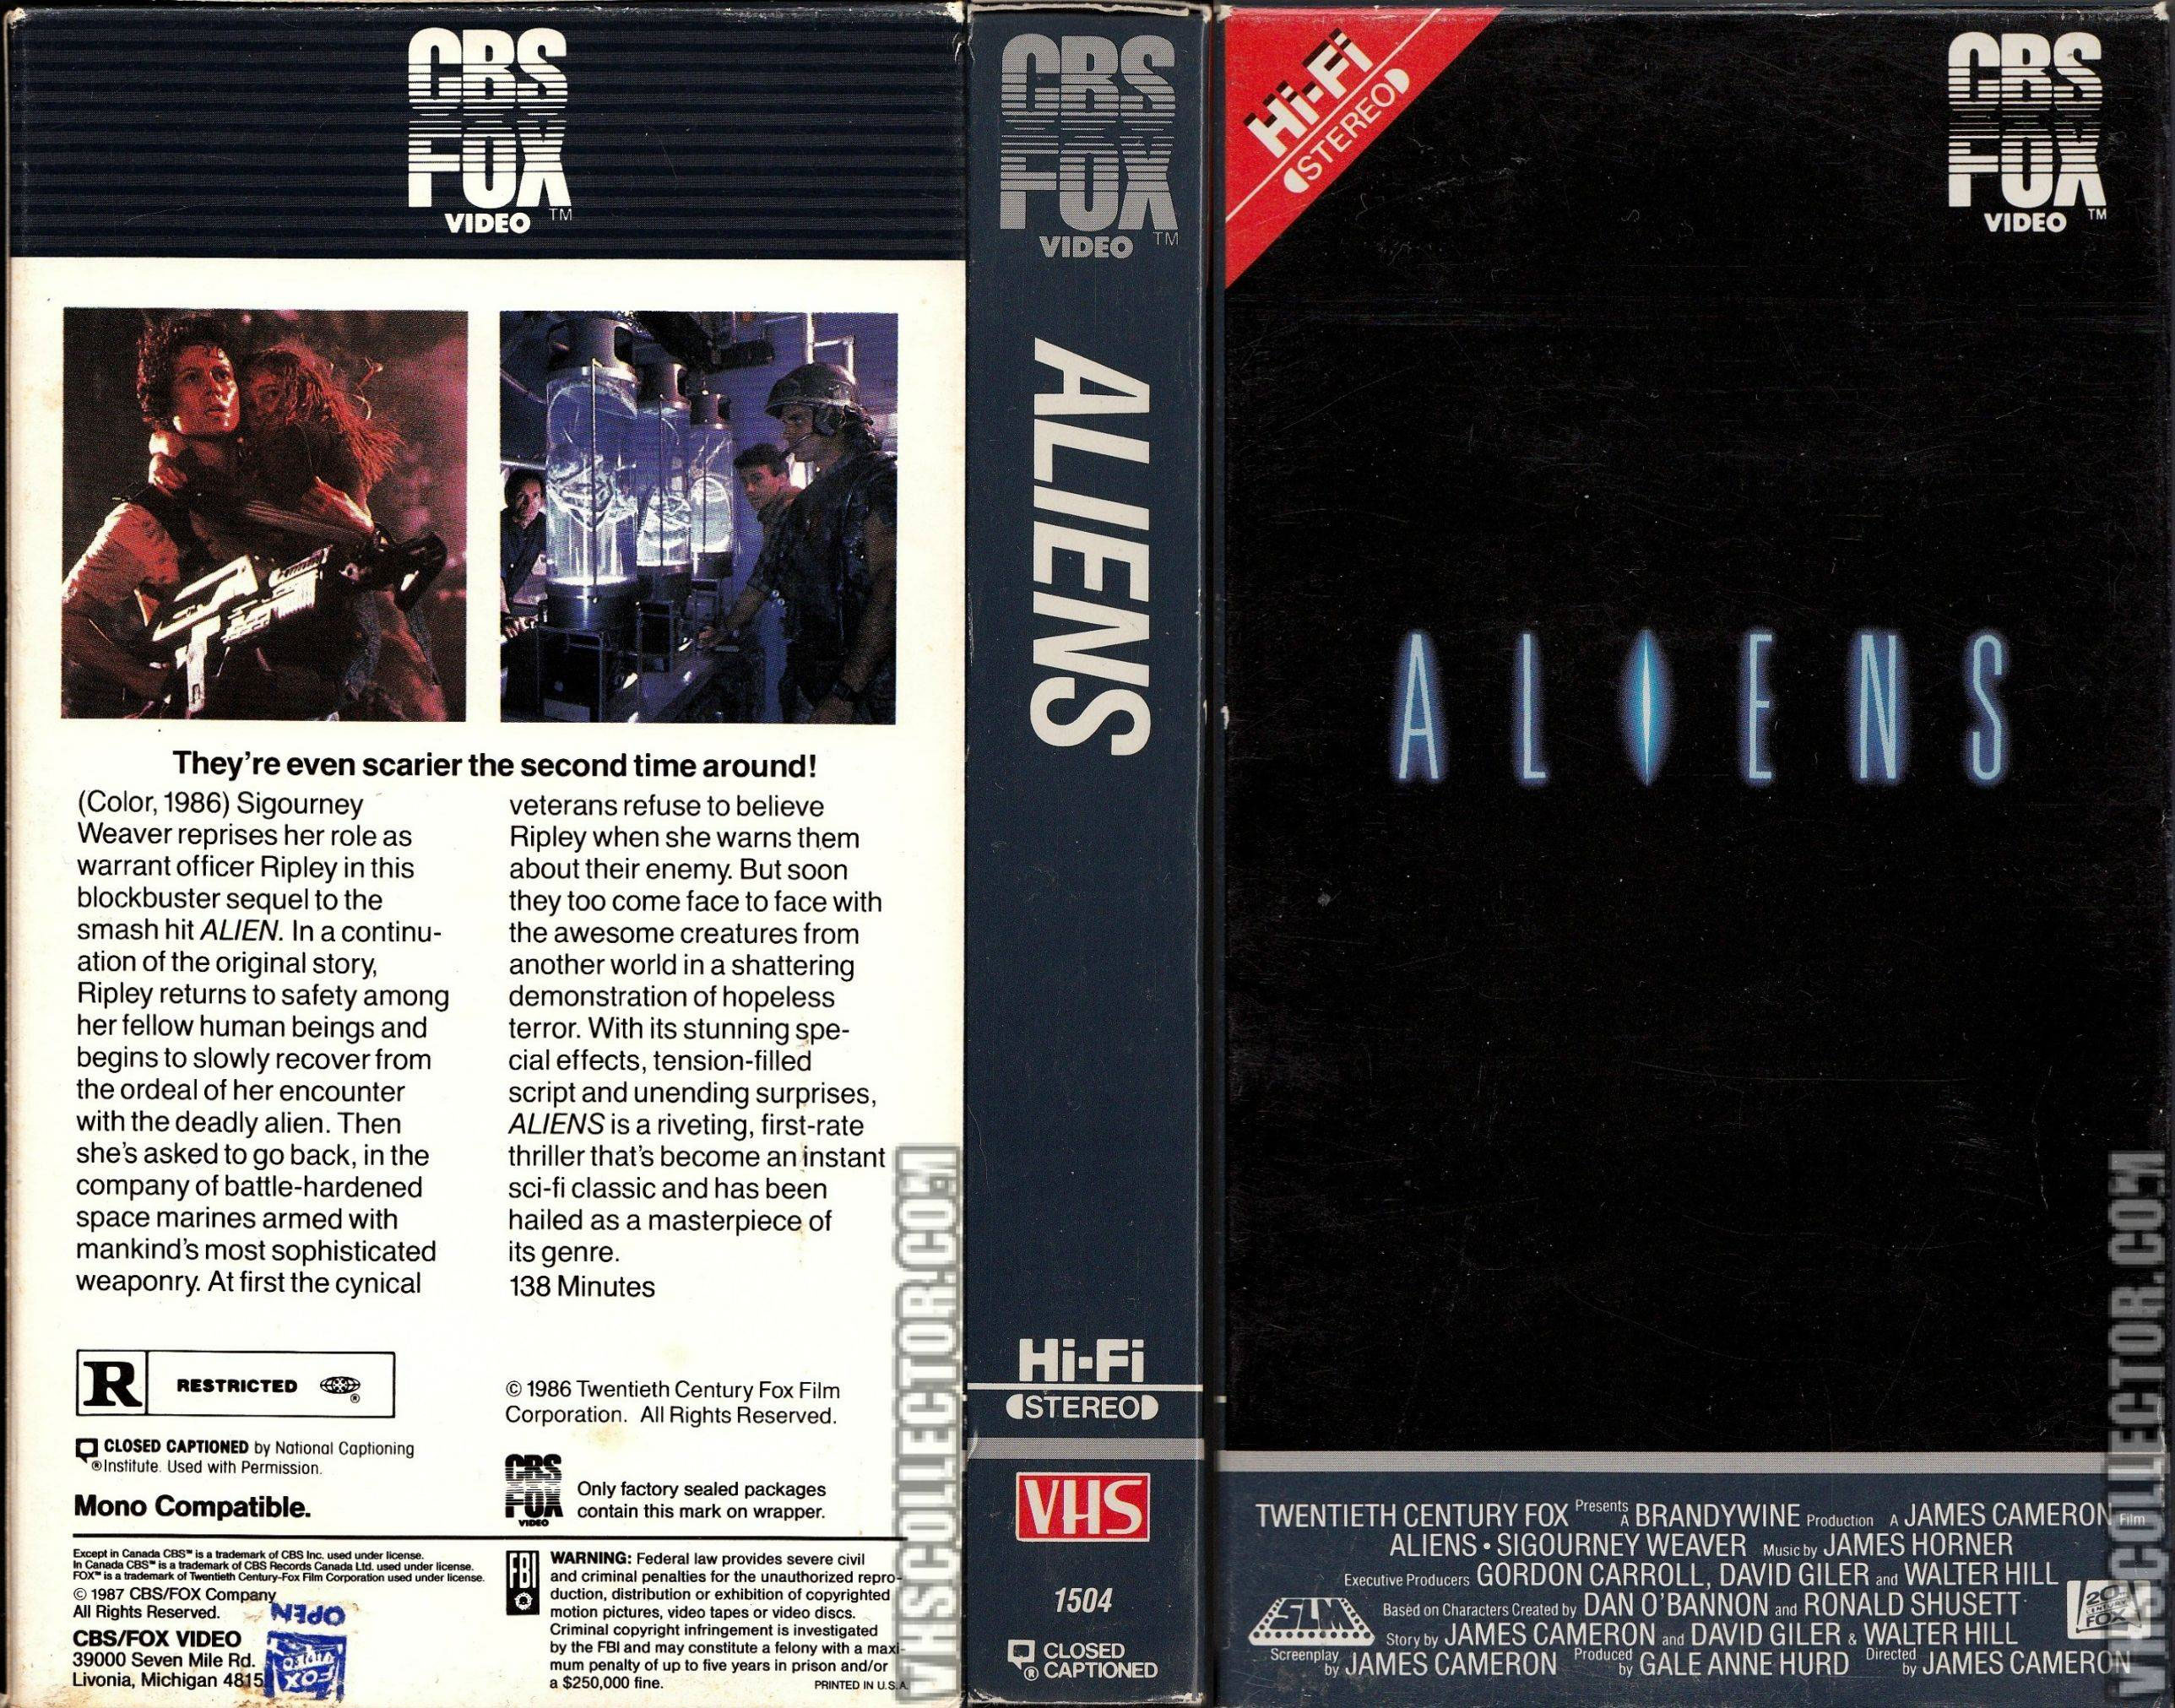 Encounters scripts. Чужой 1979 VHS. Чужие VHS. Чужой VHS обложка. Чужой 2 VHS обложка.